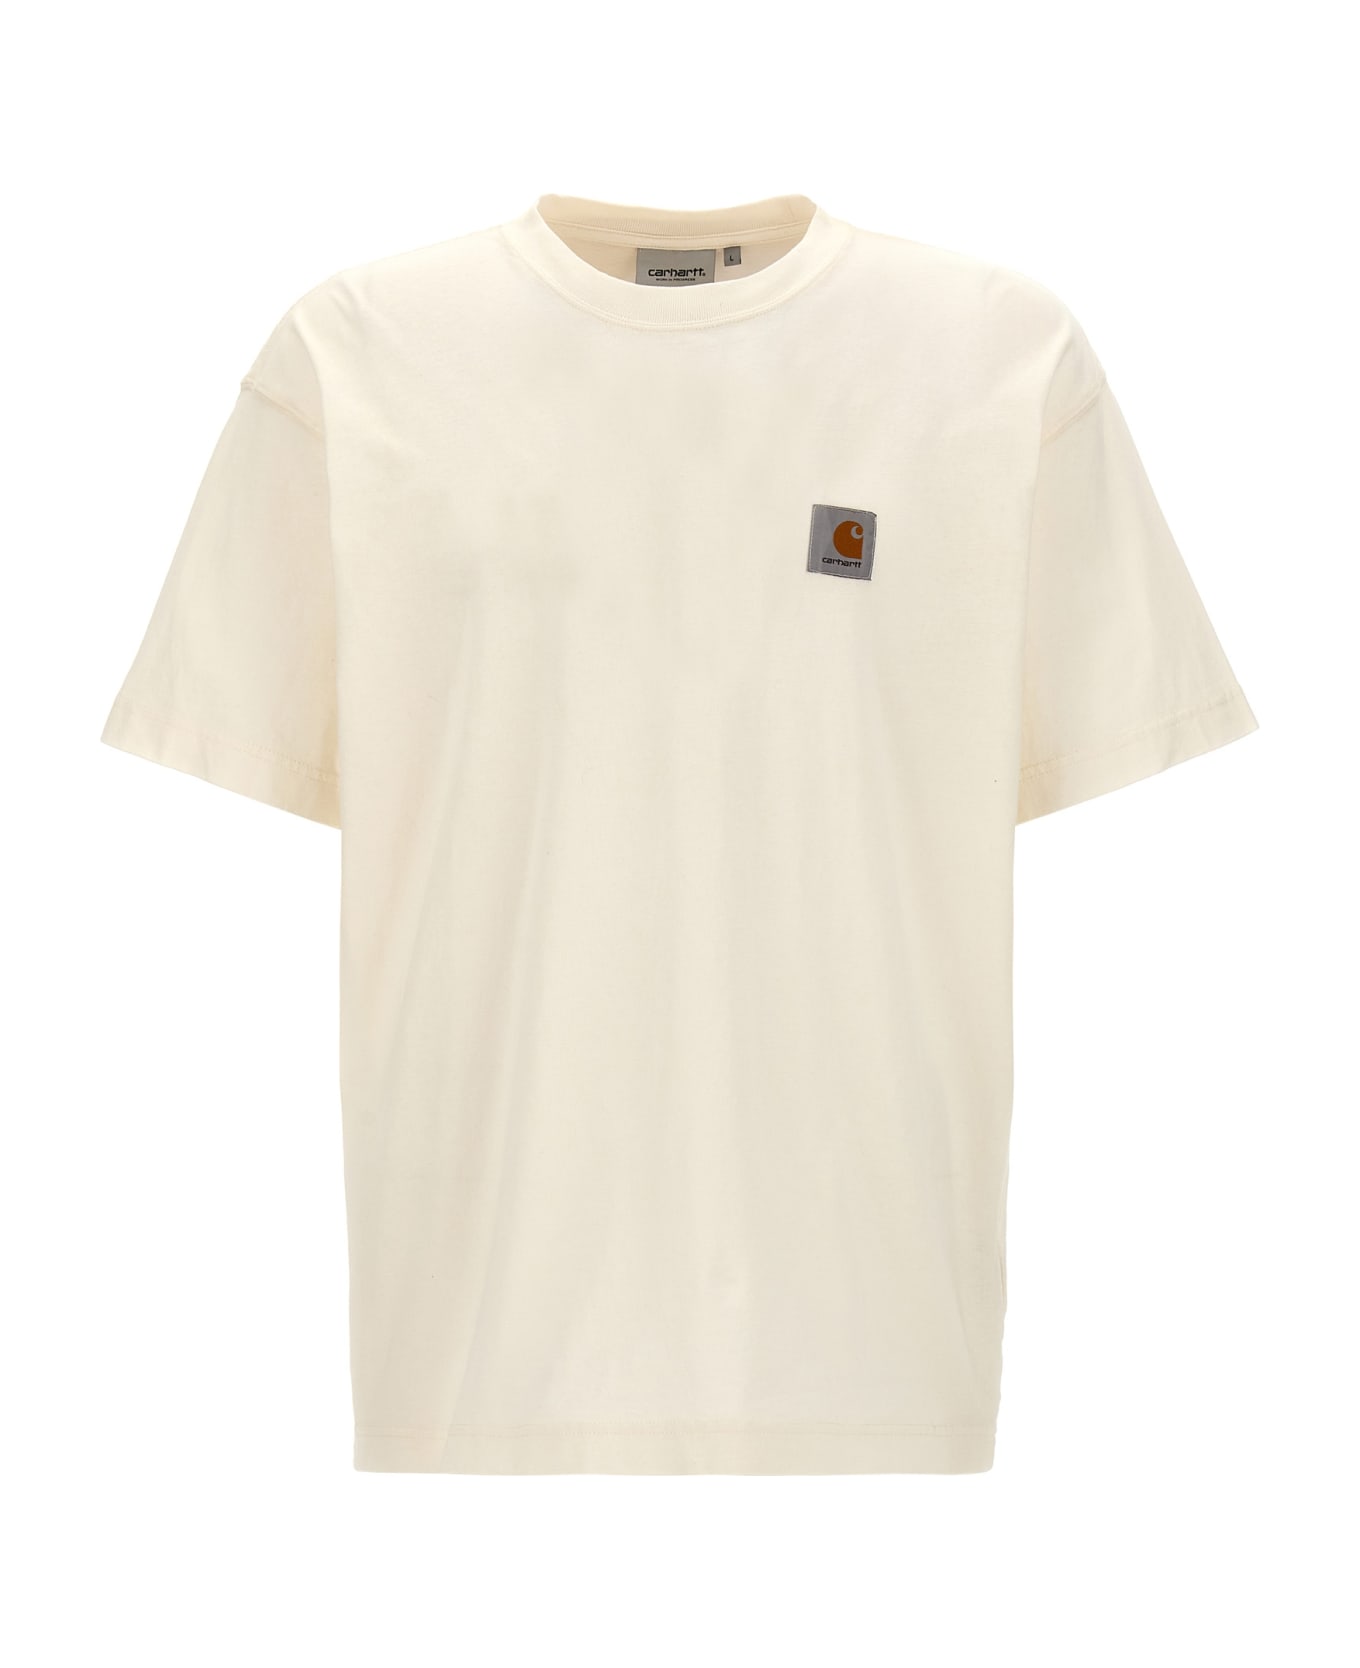 Carhartt 'nelson' T-shirt - White